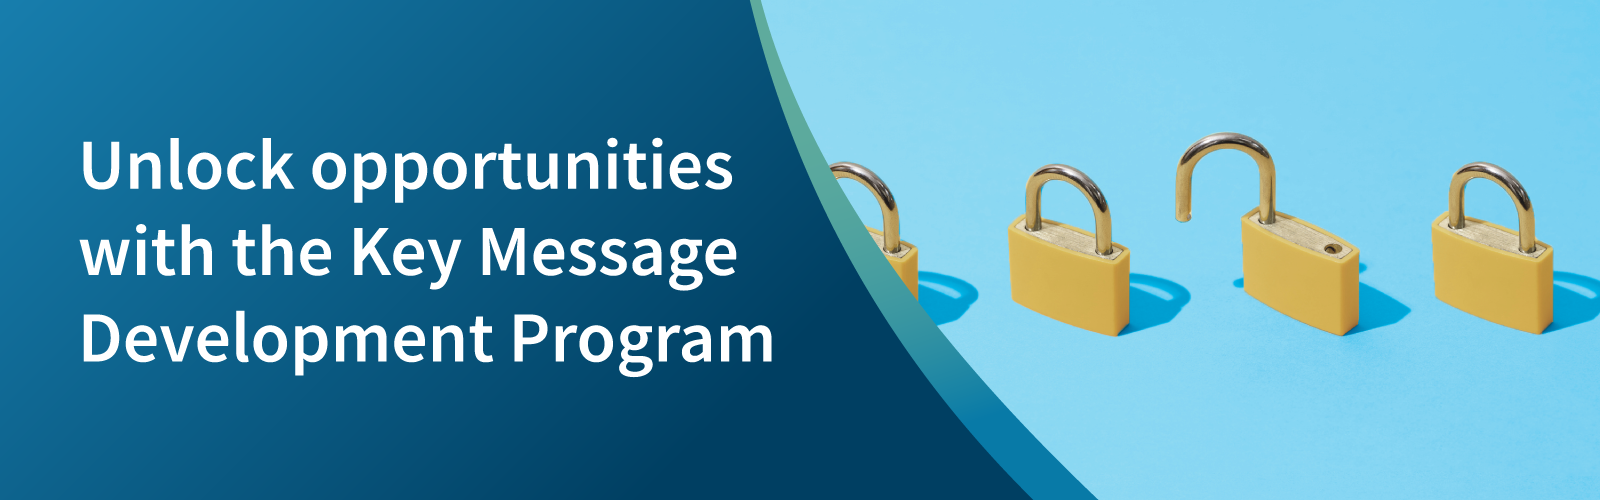 Unlock opportunities with the Key Message Development Program.